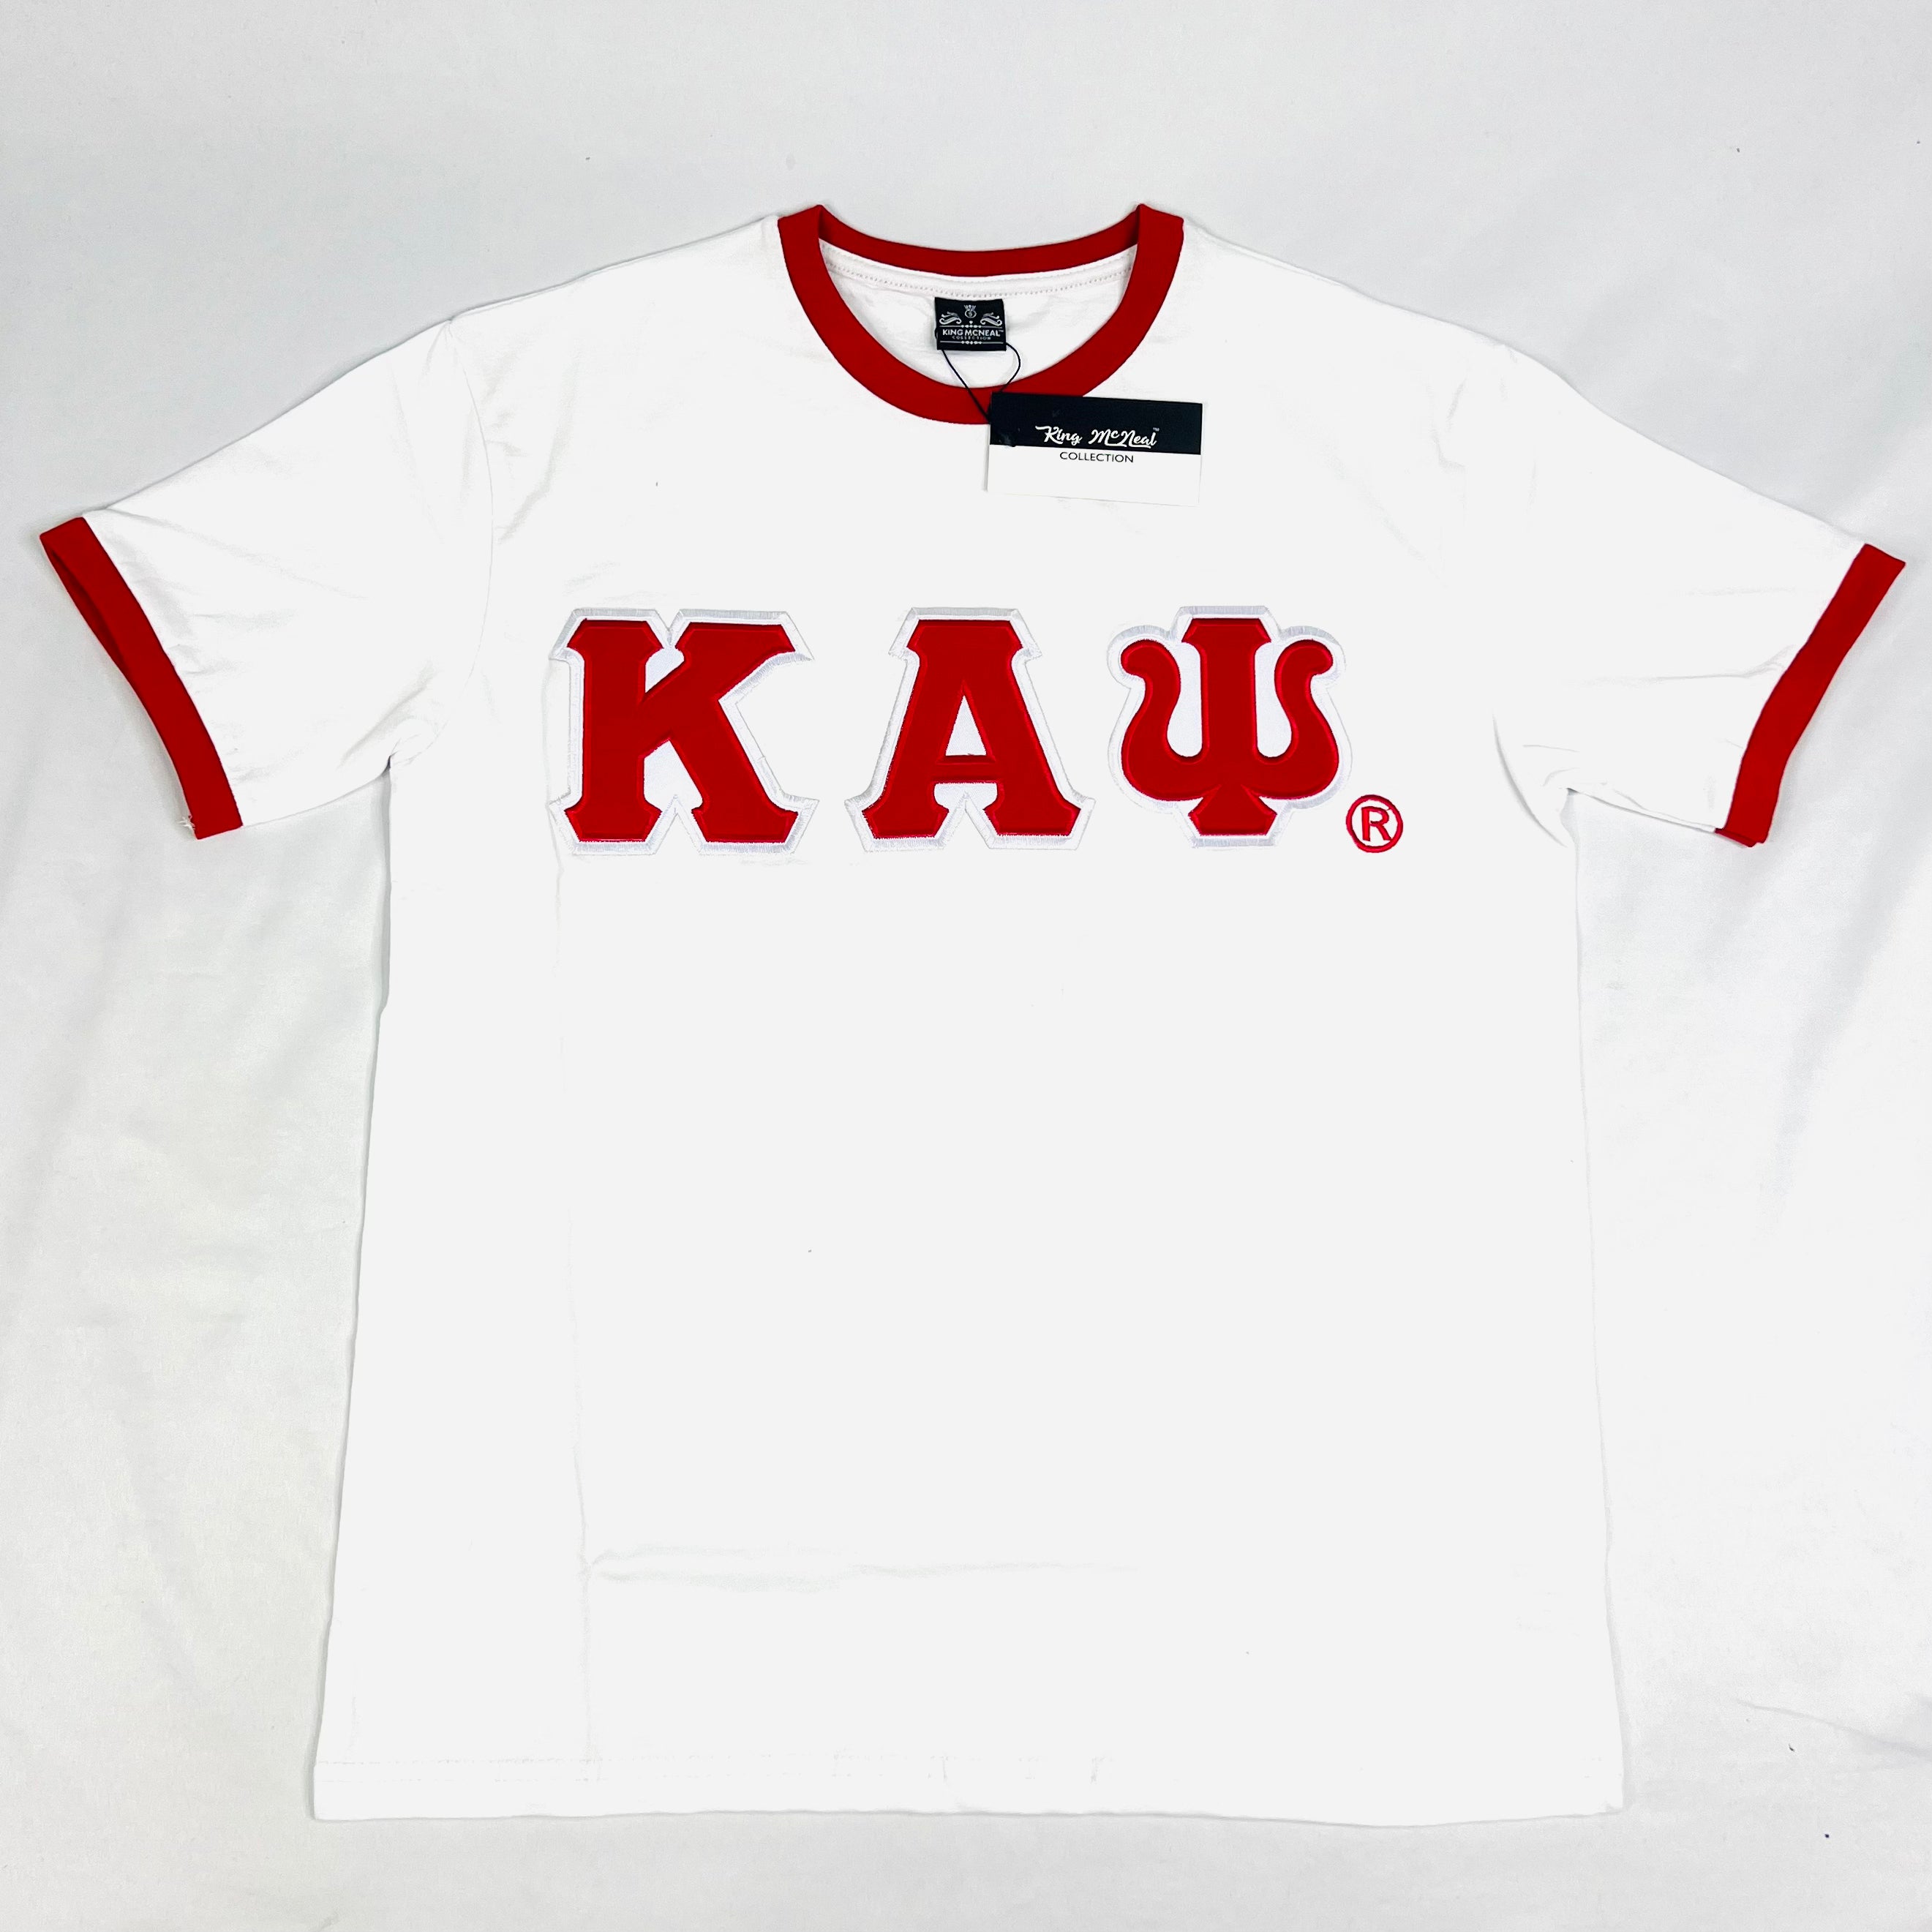 Kappa “KΑΨ” White Embroidered Premium Ringer Shirt